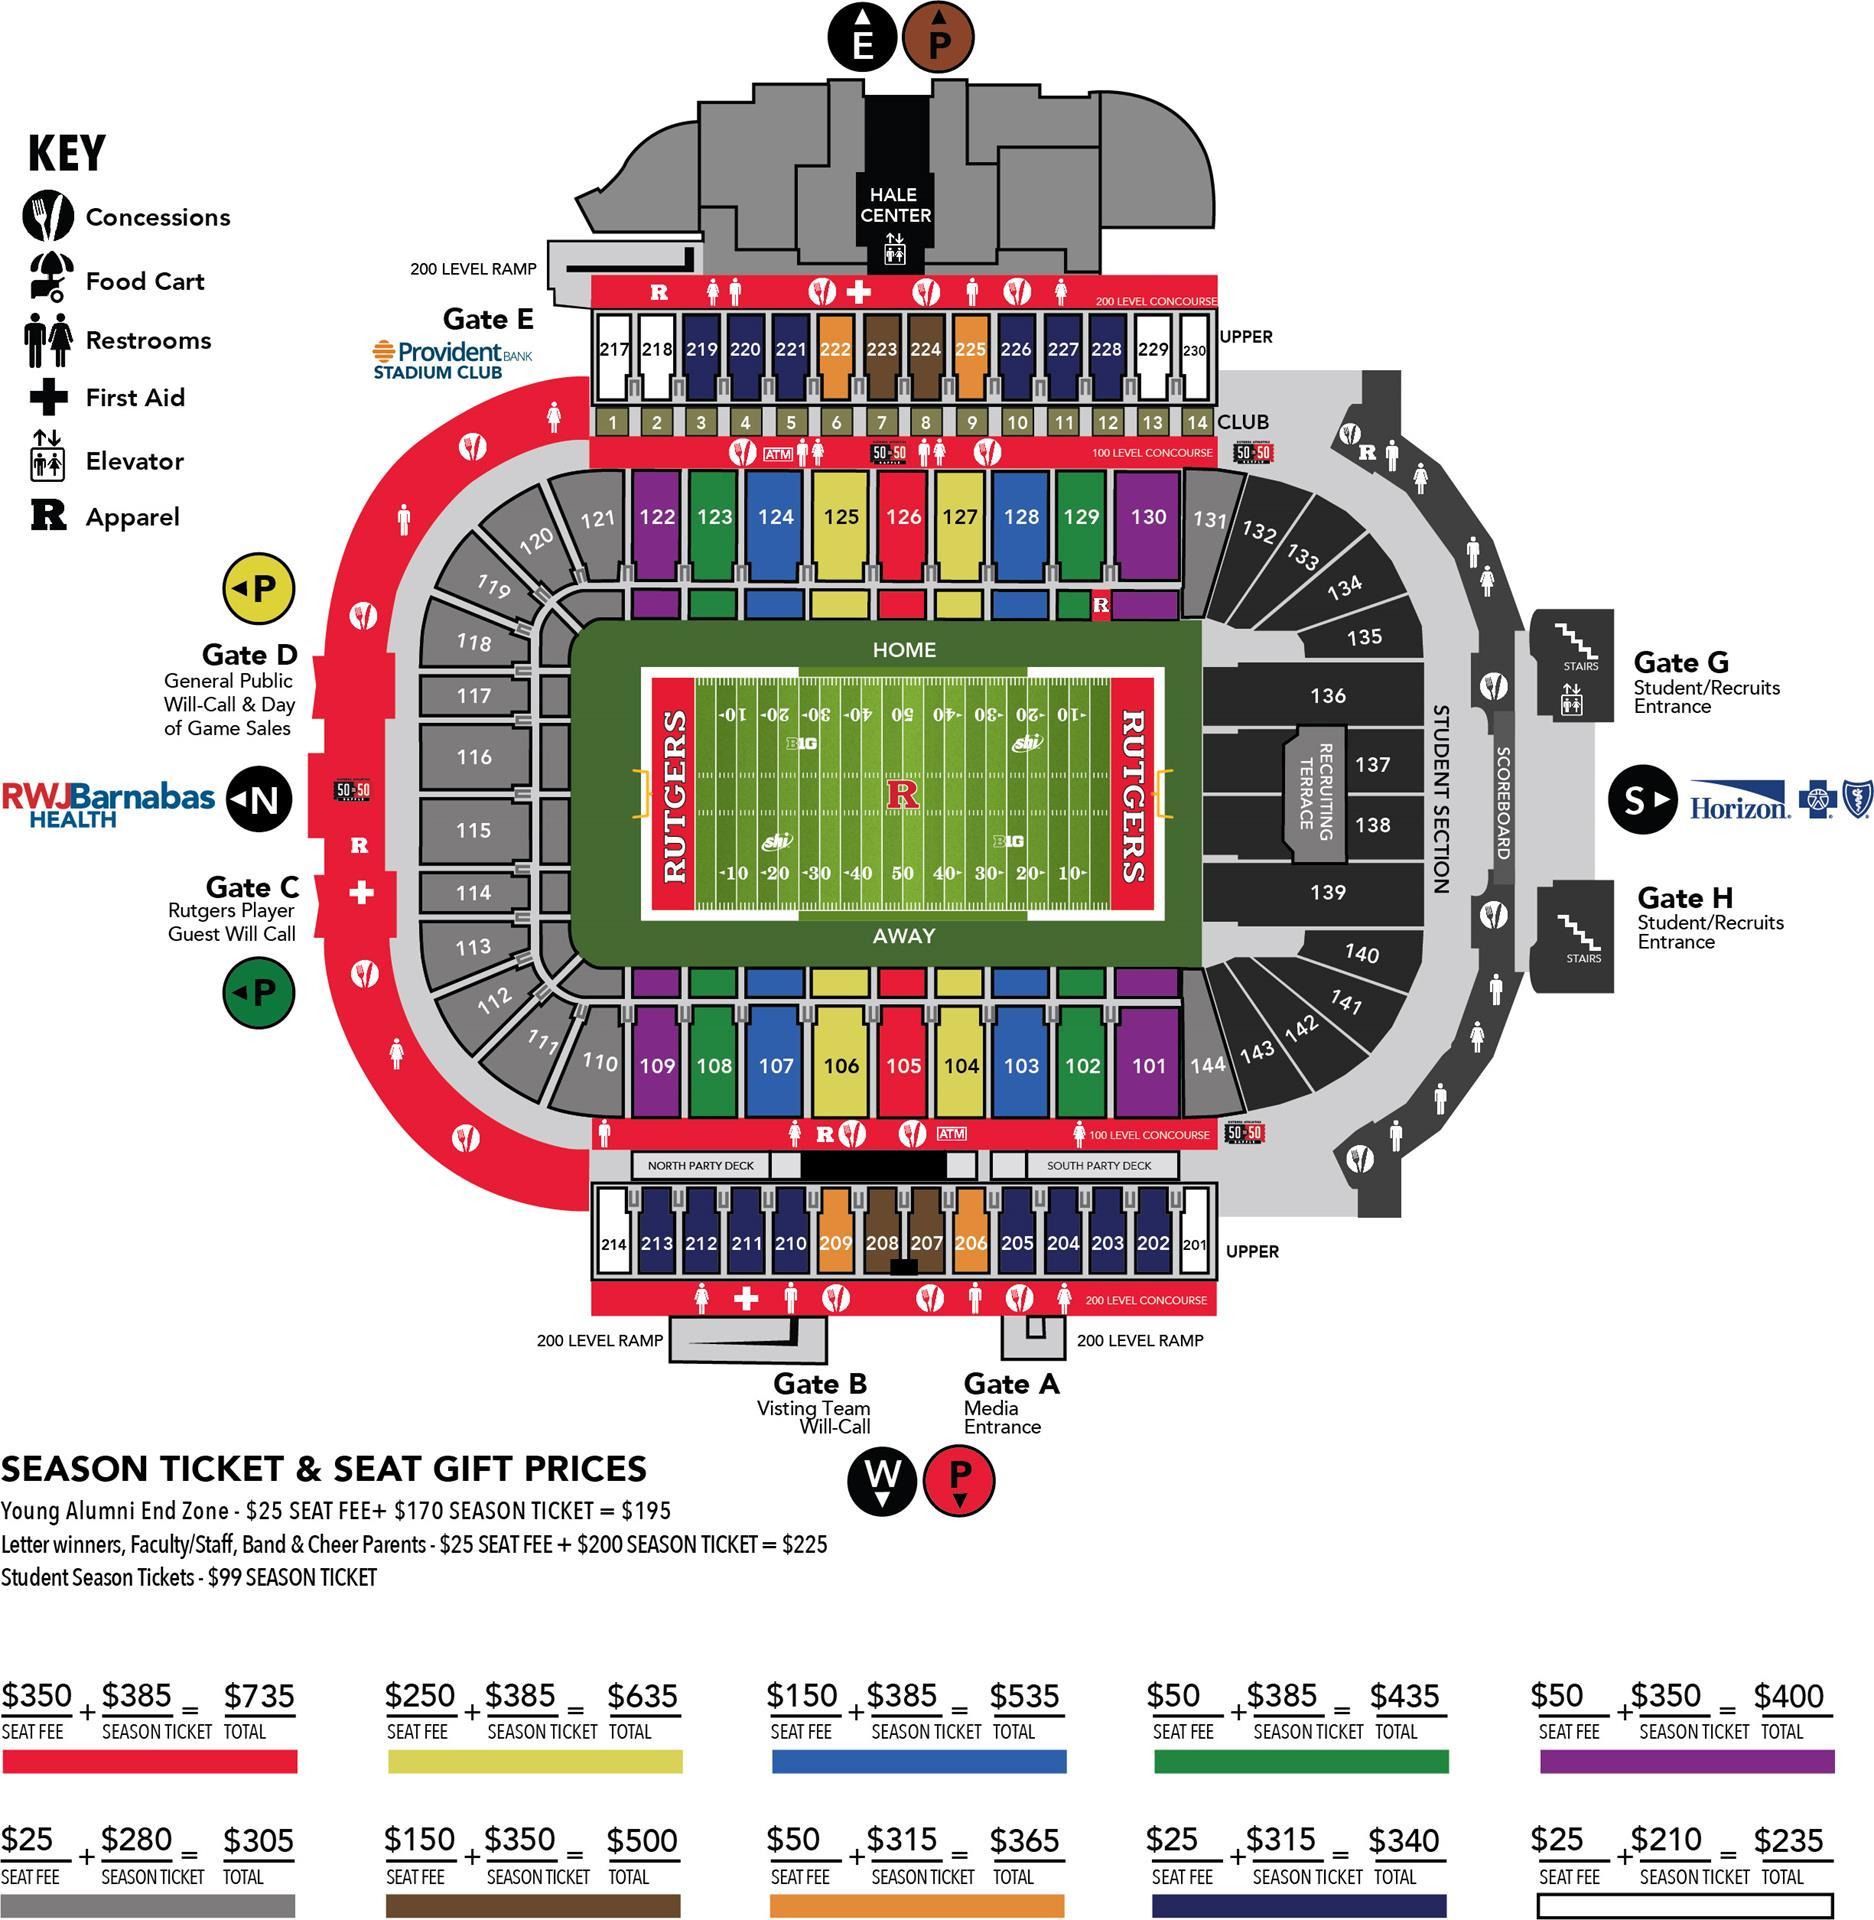 2020_Season_Ticket_Pricing_Map.jpg